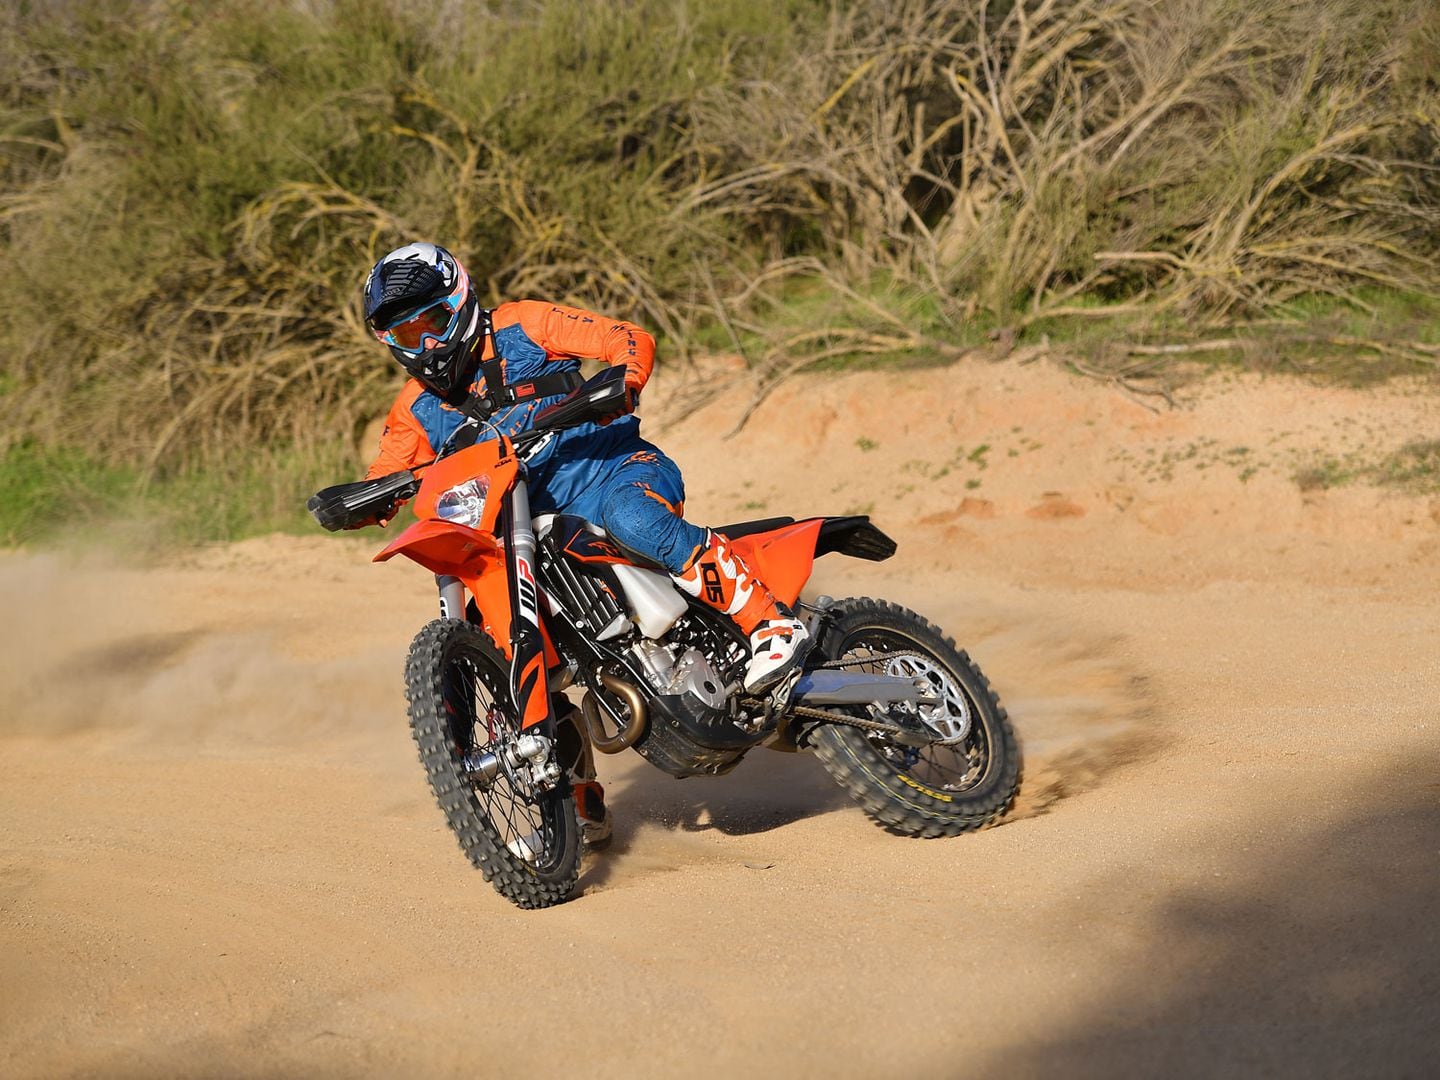 2020 KTM 350 XCFW Review Dirt Rider